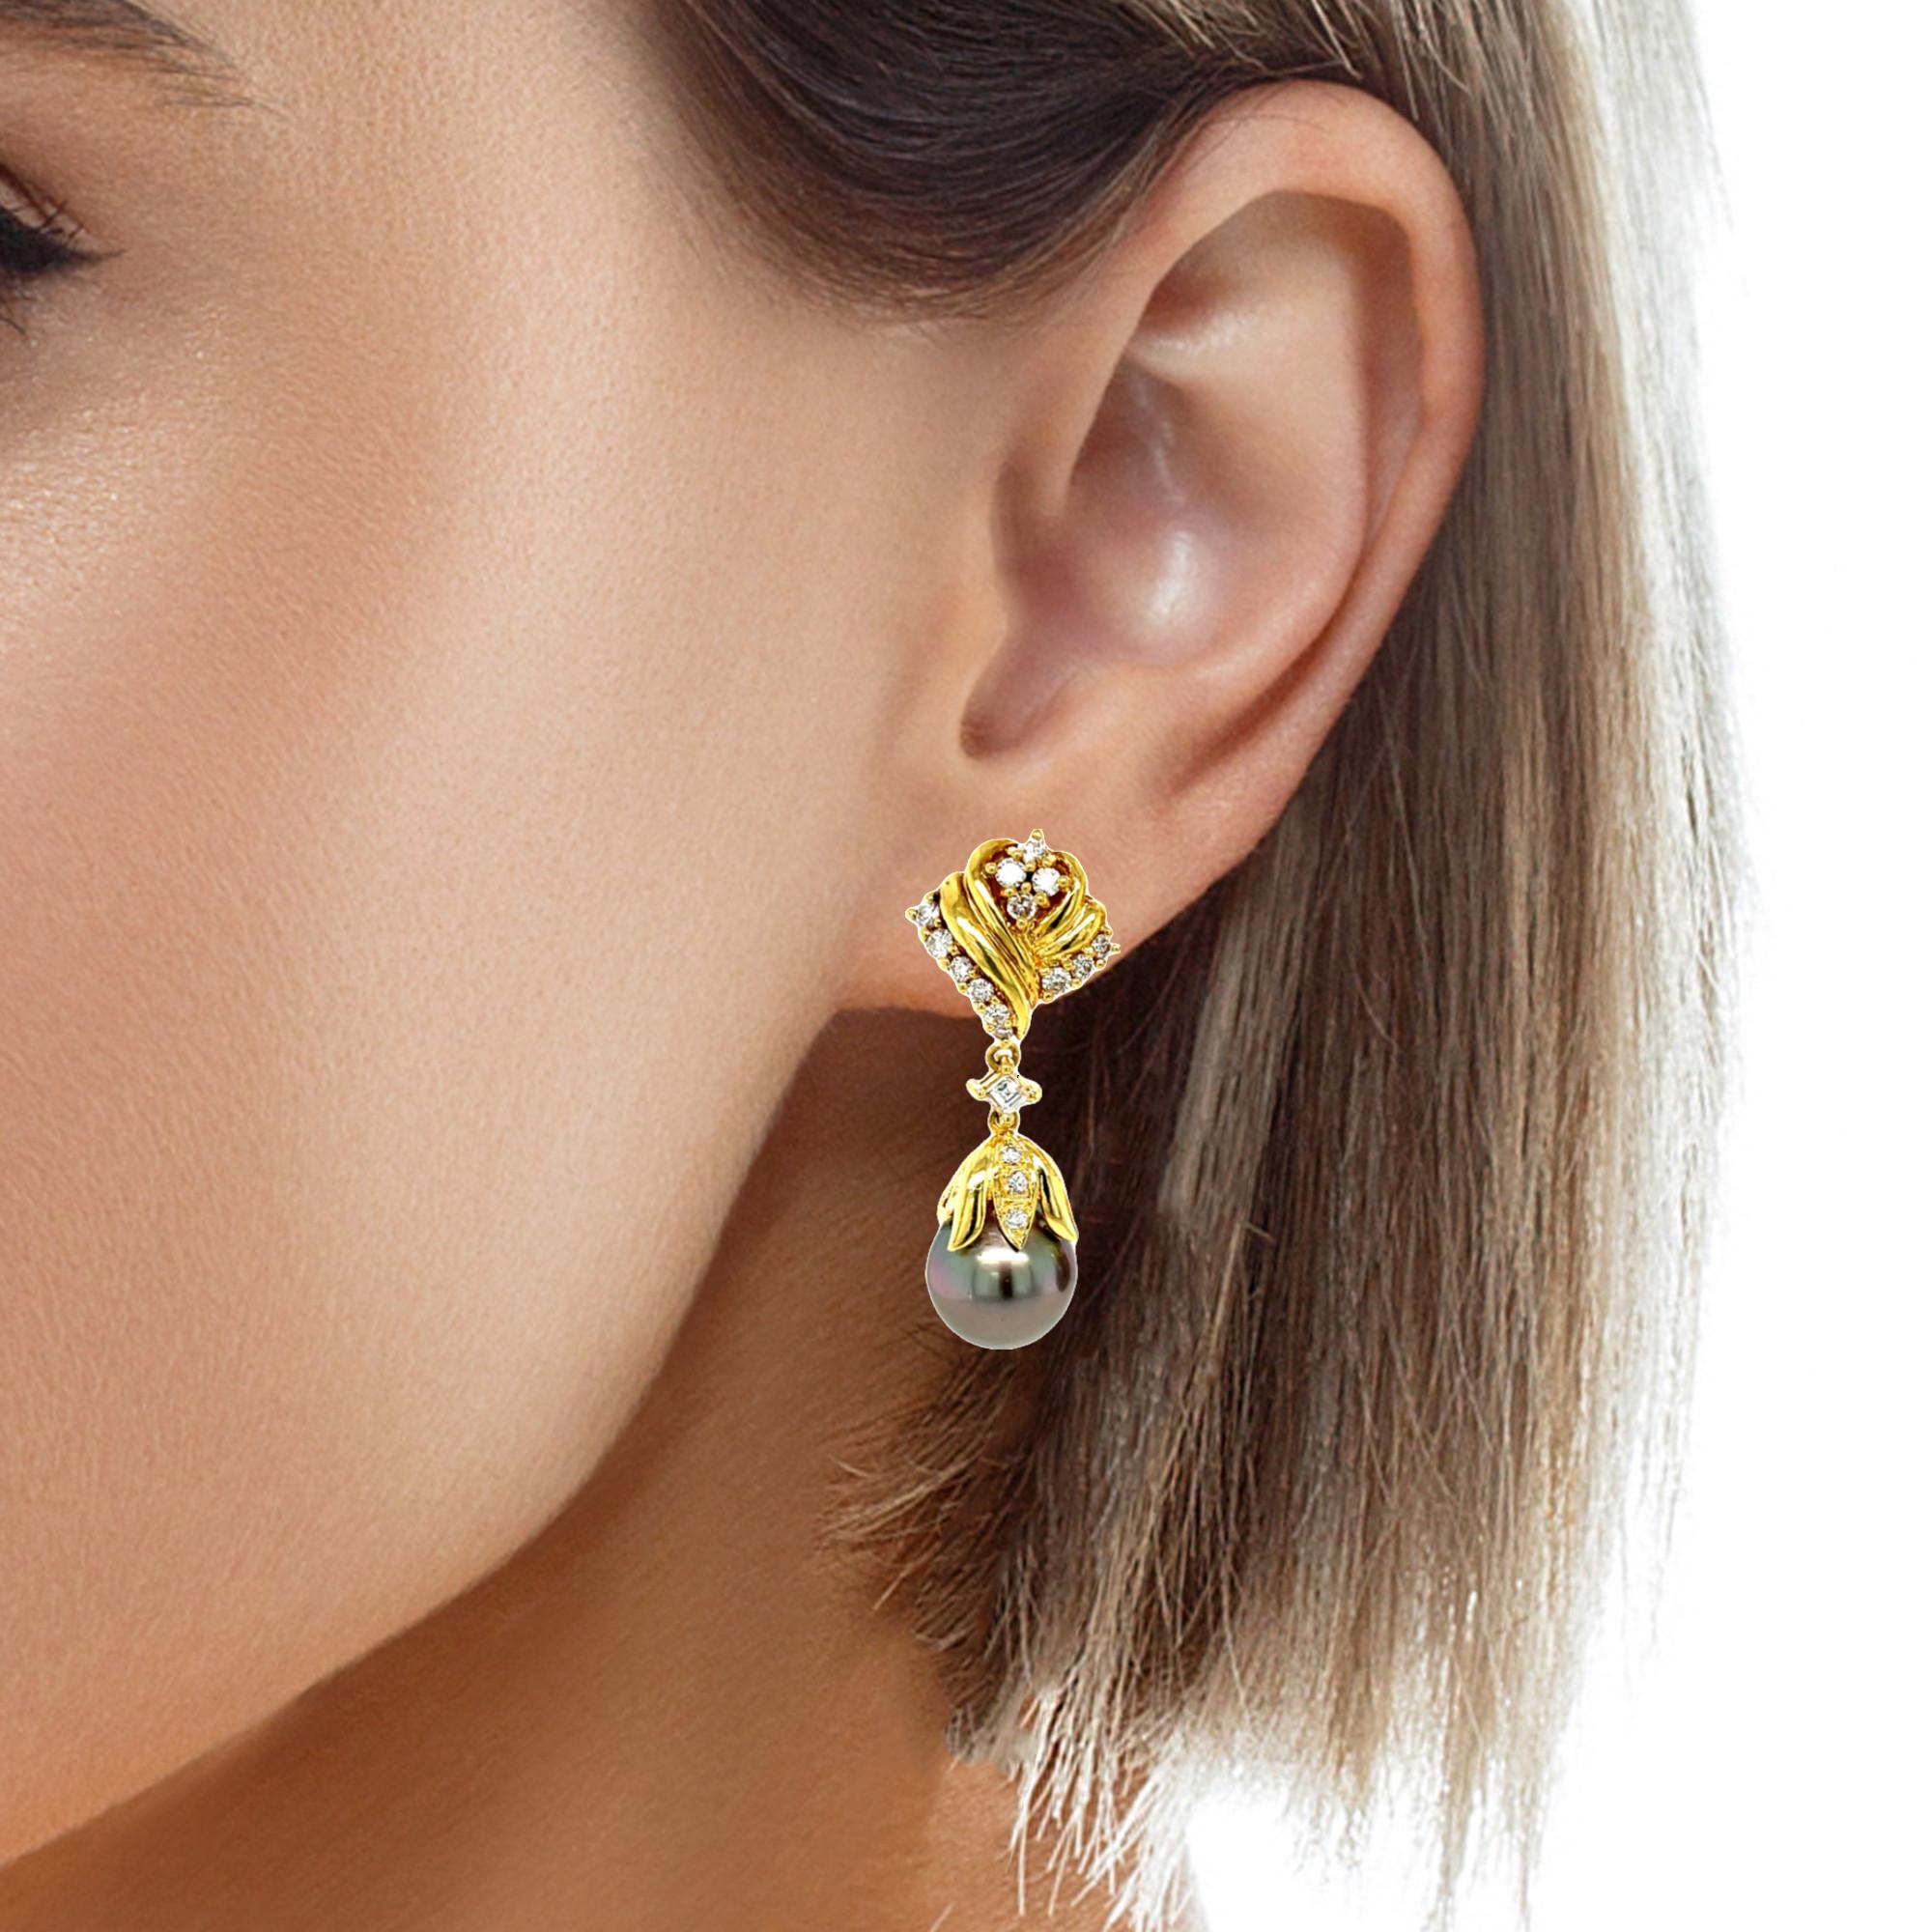  11.25mm South Sea Pearl and Diamond Dangle Earrings in 18k Yellow Gold  4